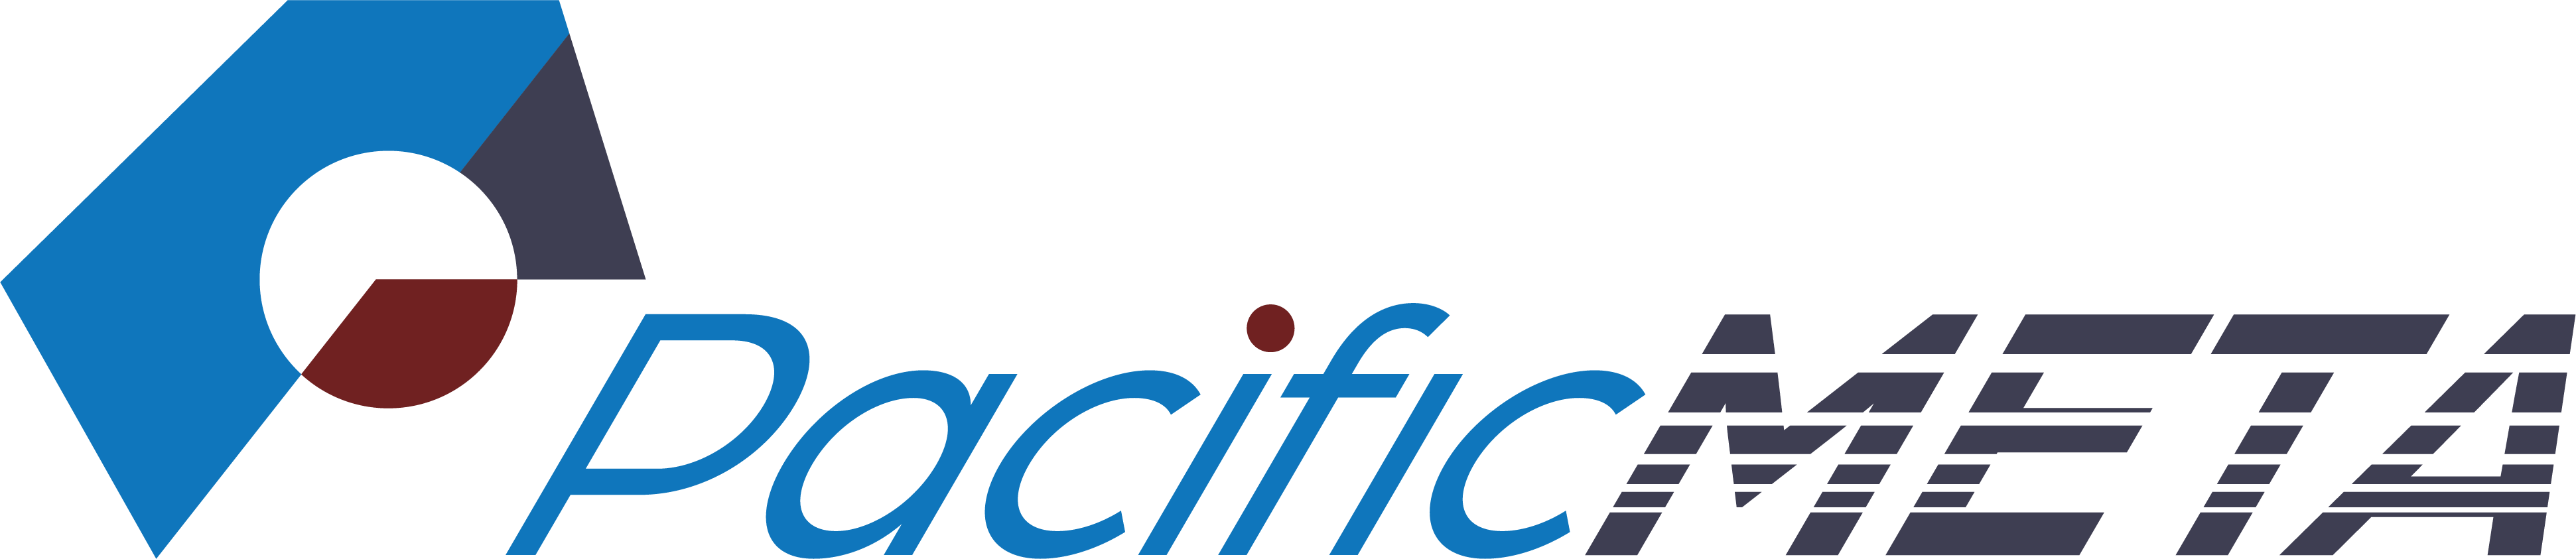 Pacific Meta Pte Ltd Logo